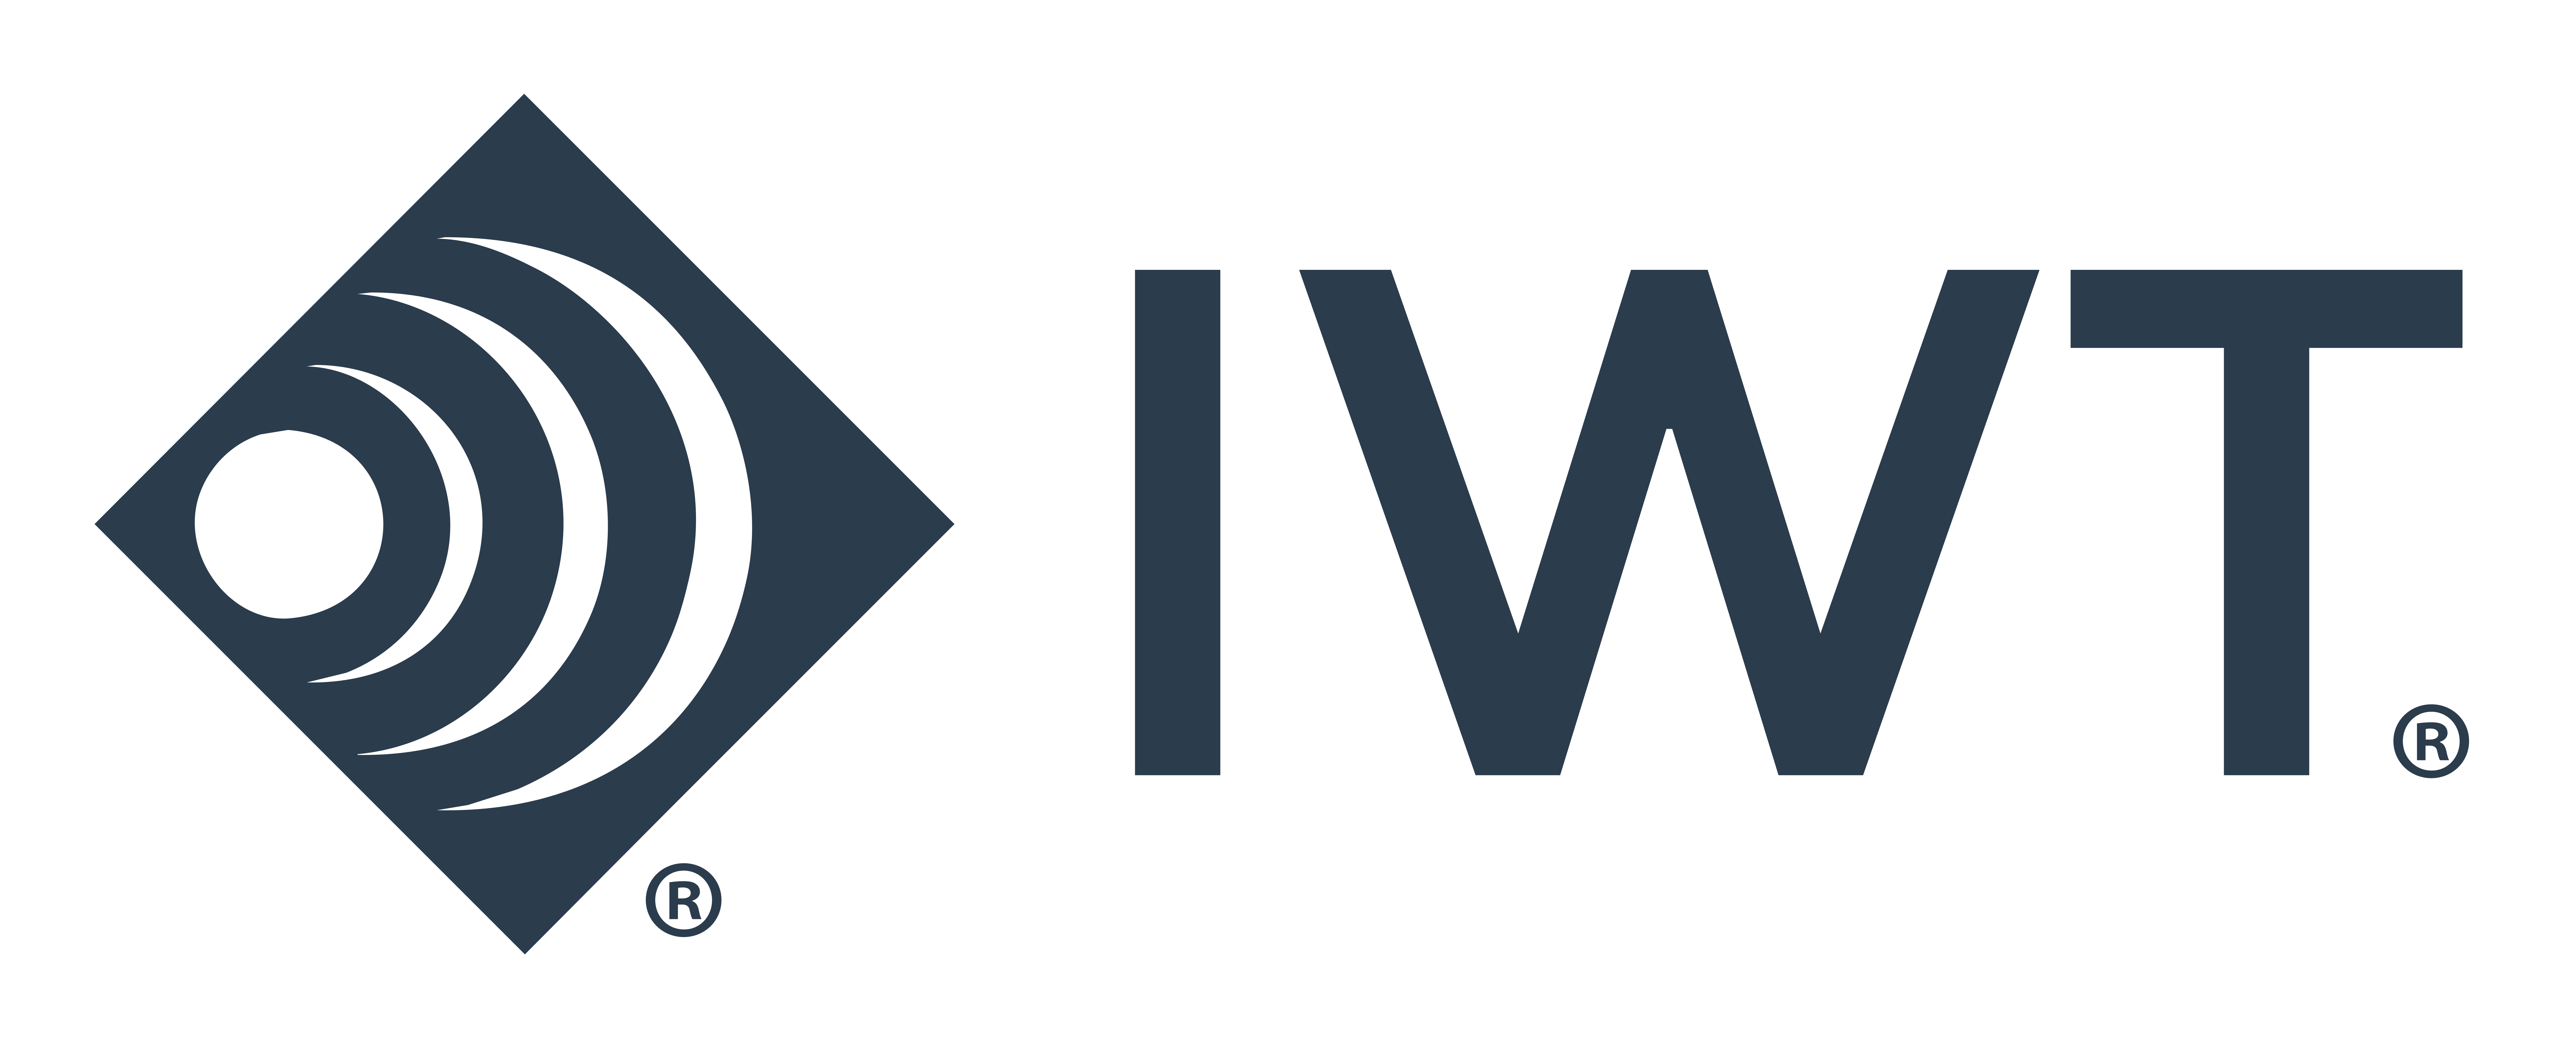 IWT logo in blue